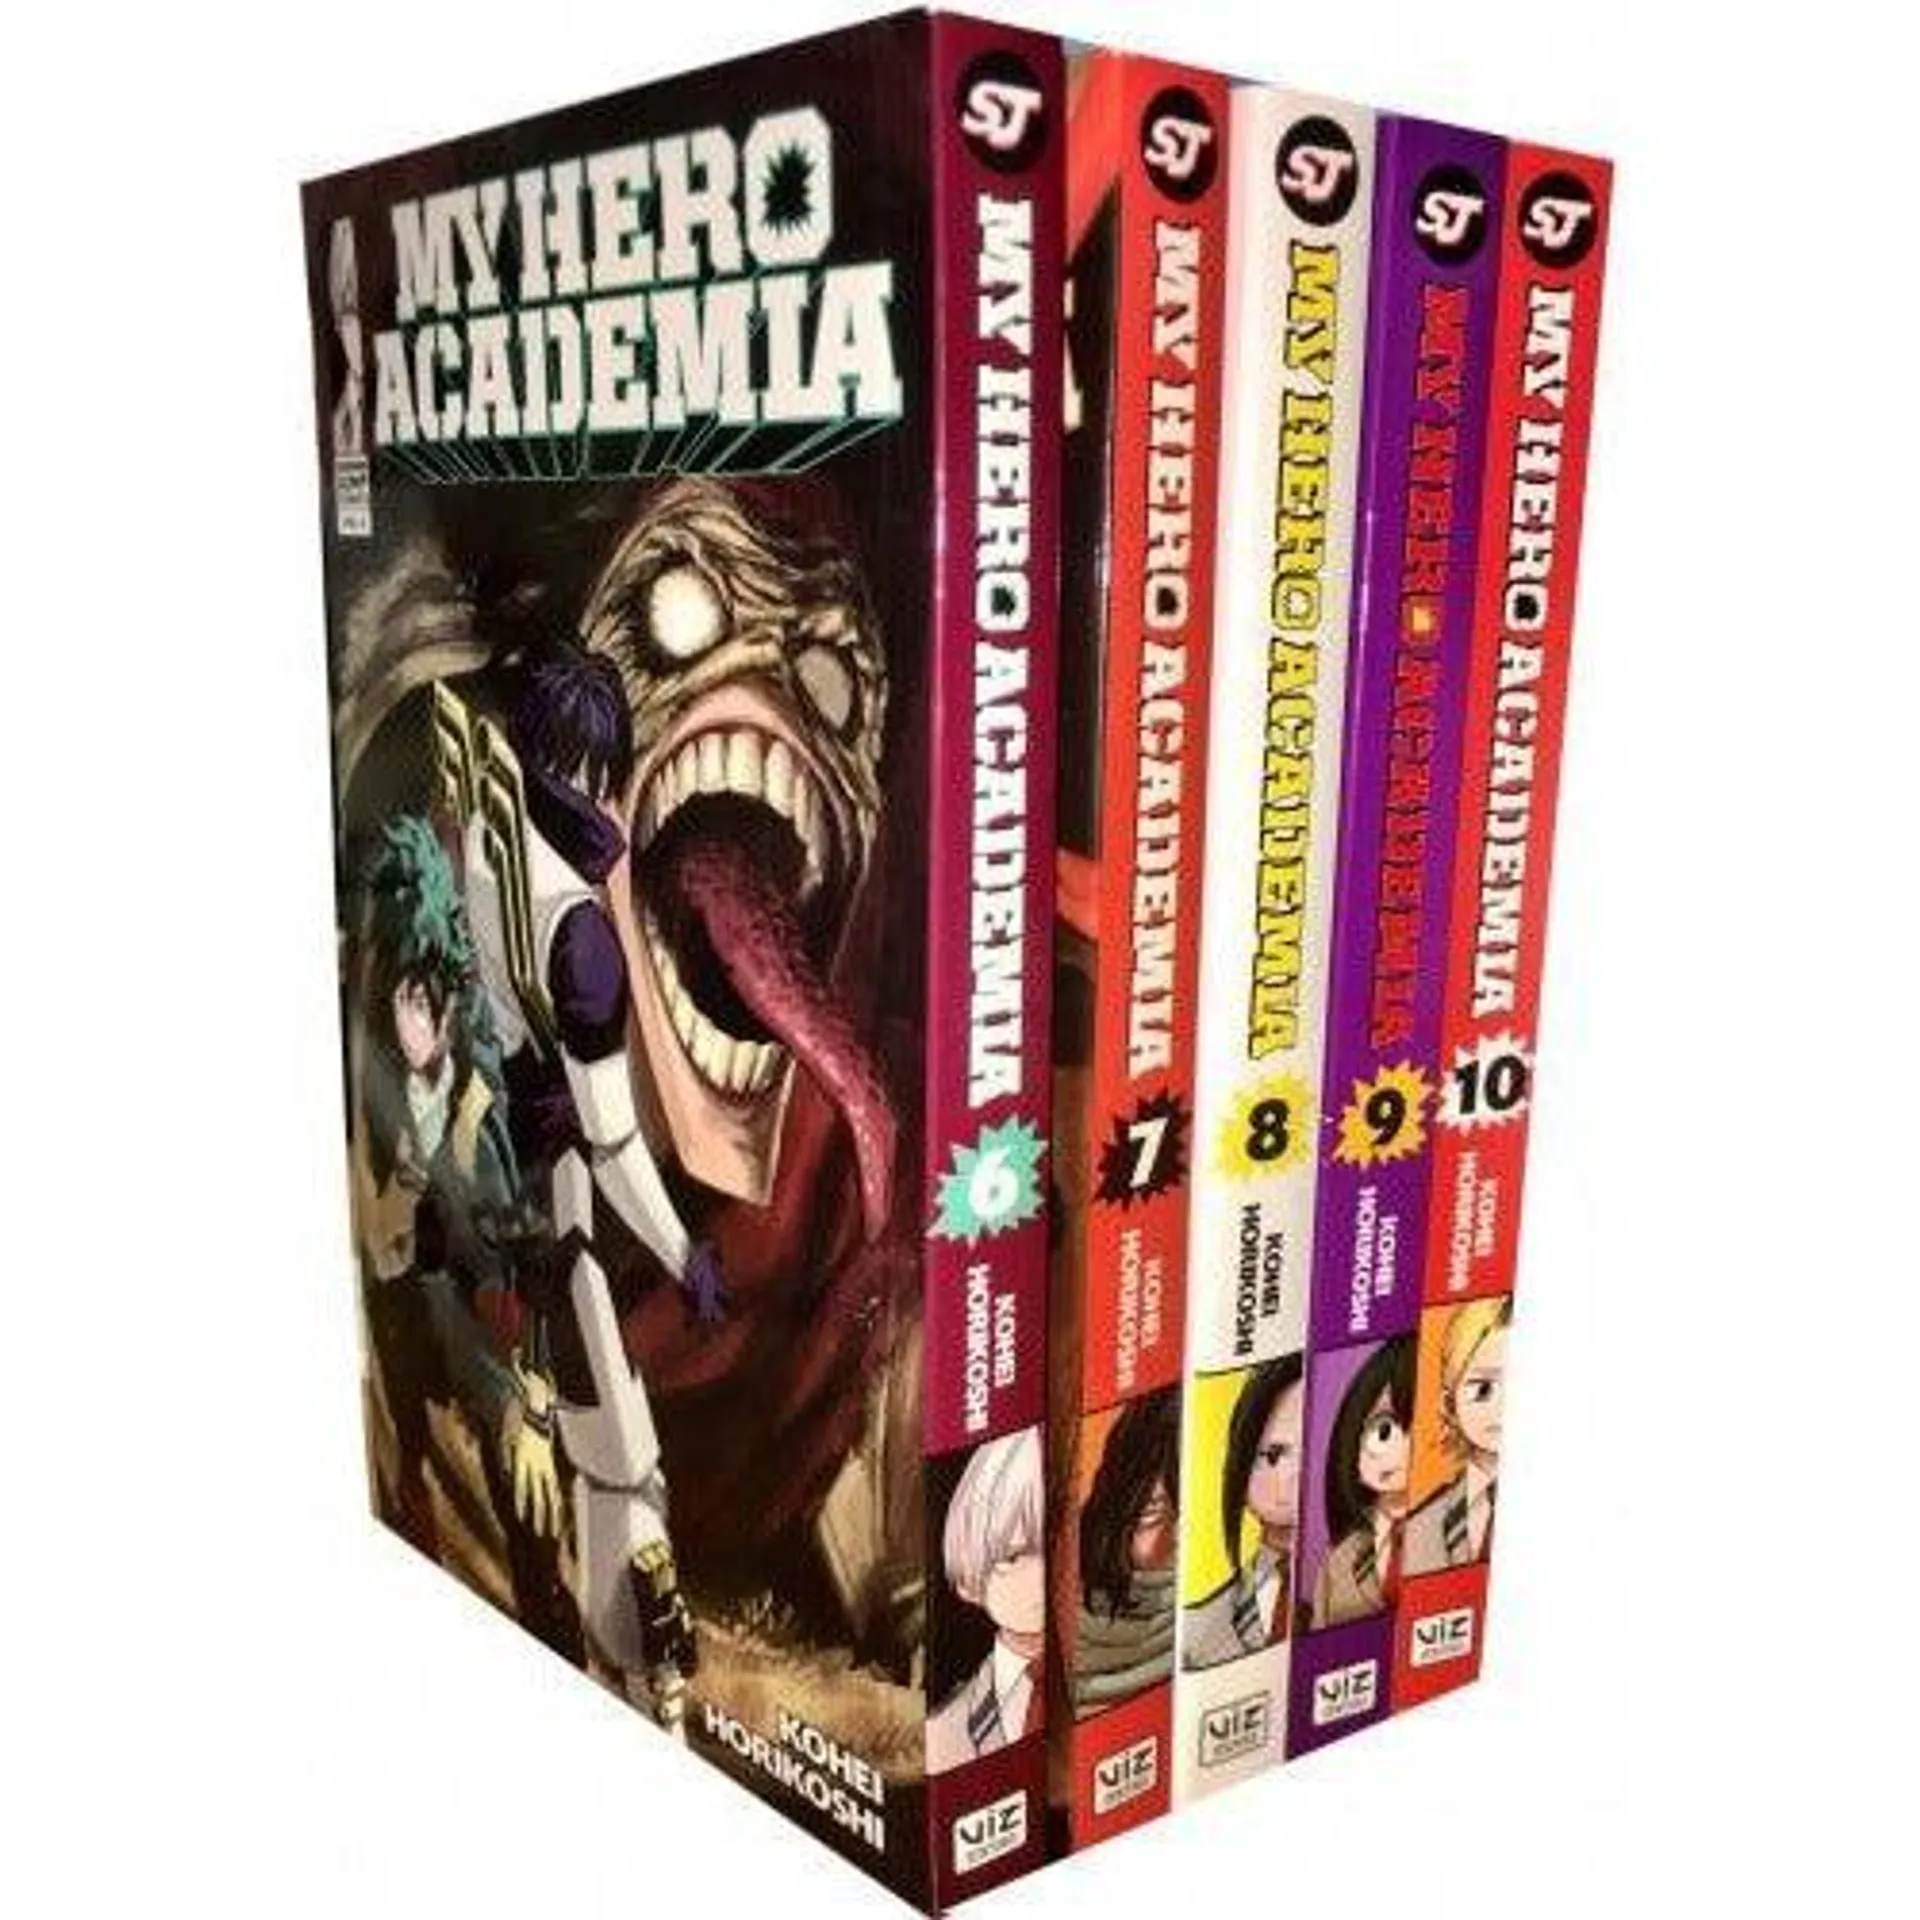 My Hero Academia Volume 6-10 Collection 5 Books Set Series 2